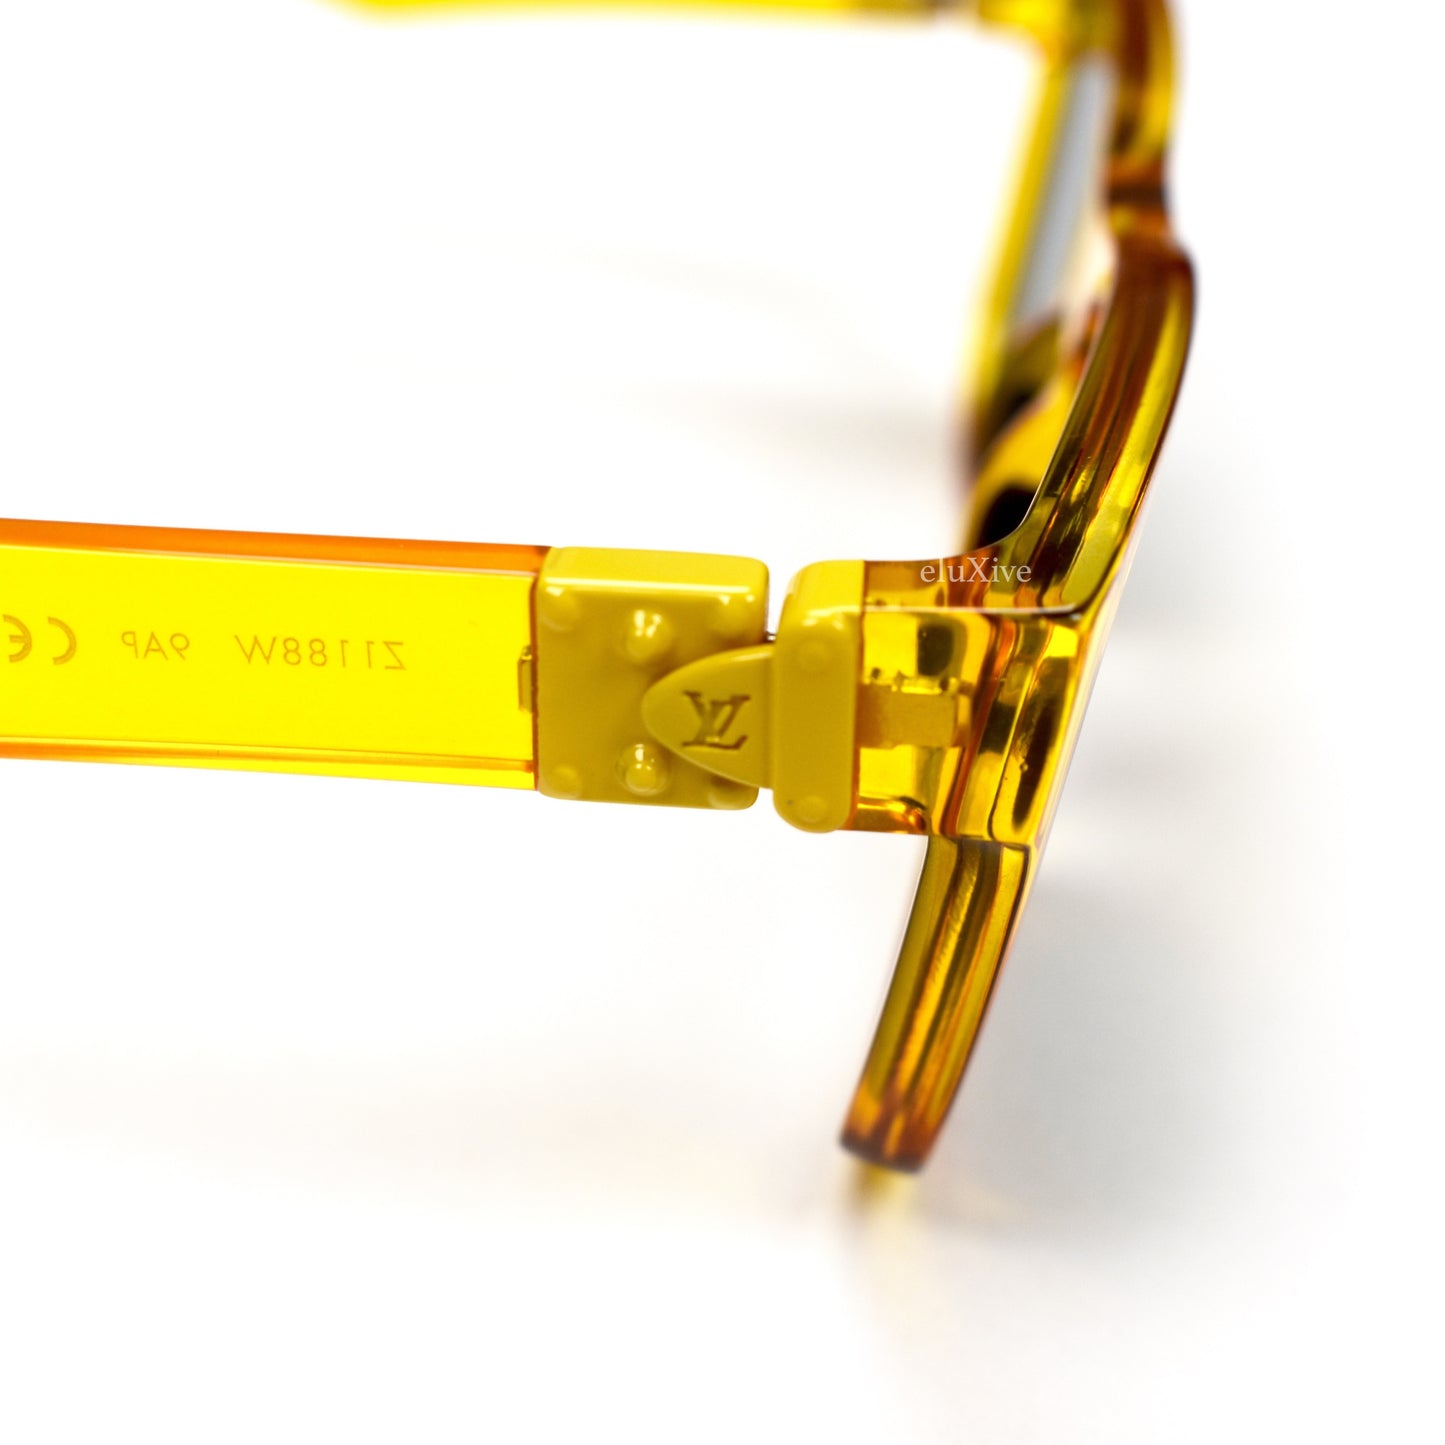 Louis Vuitton - Yellow Rainbow Square Sunglasses